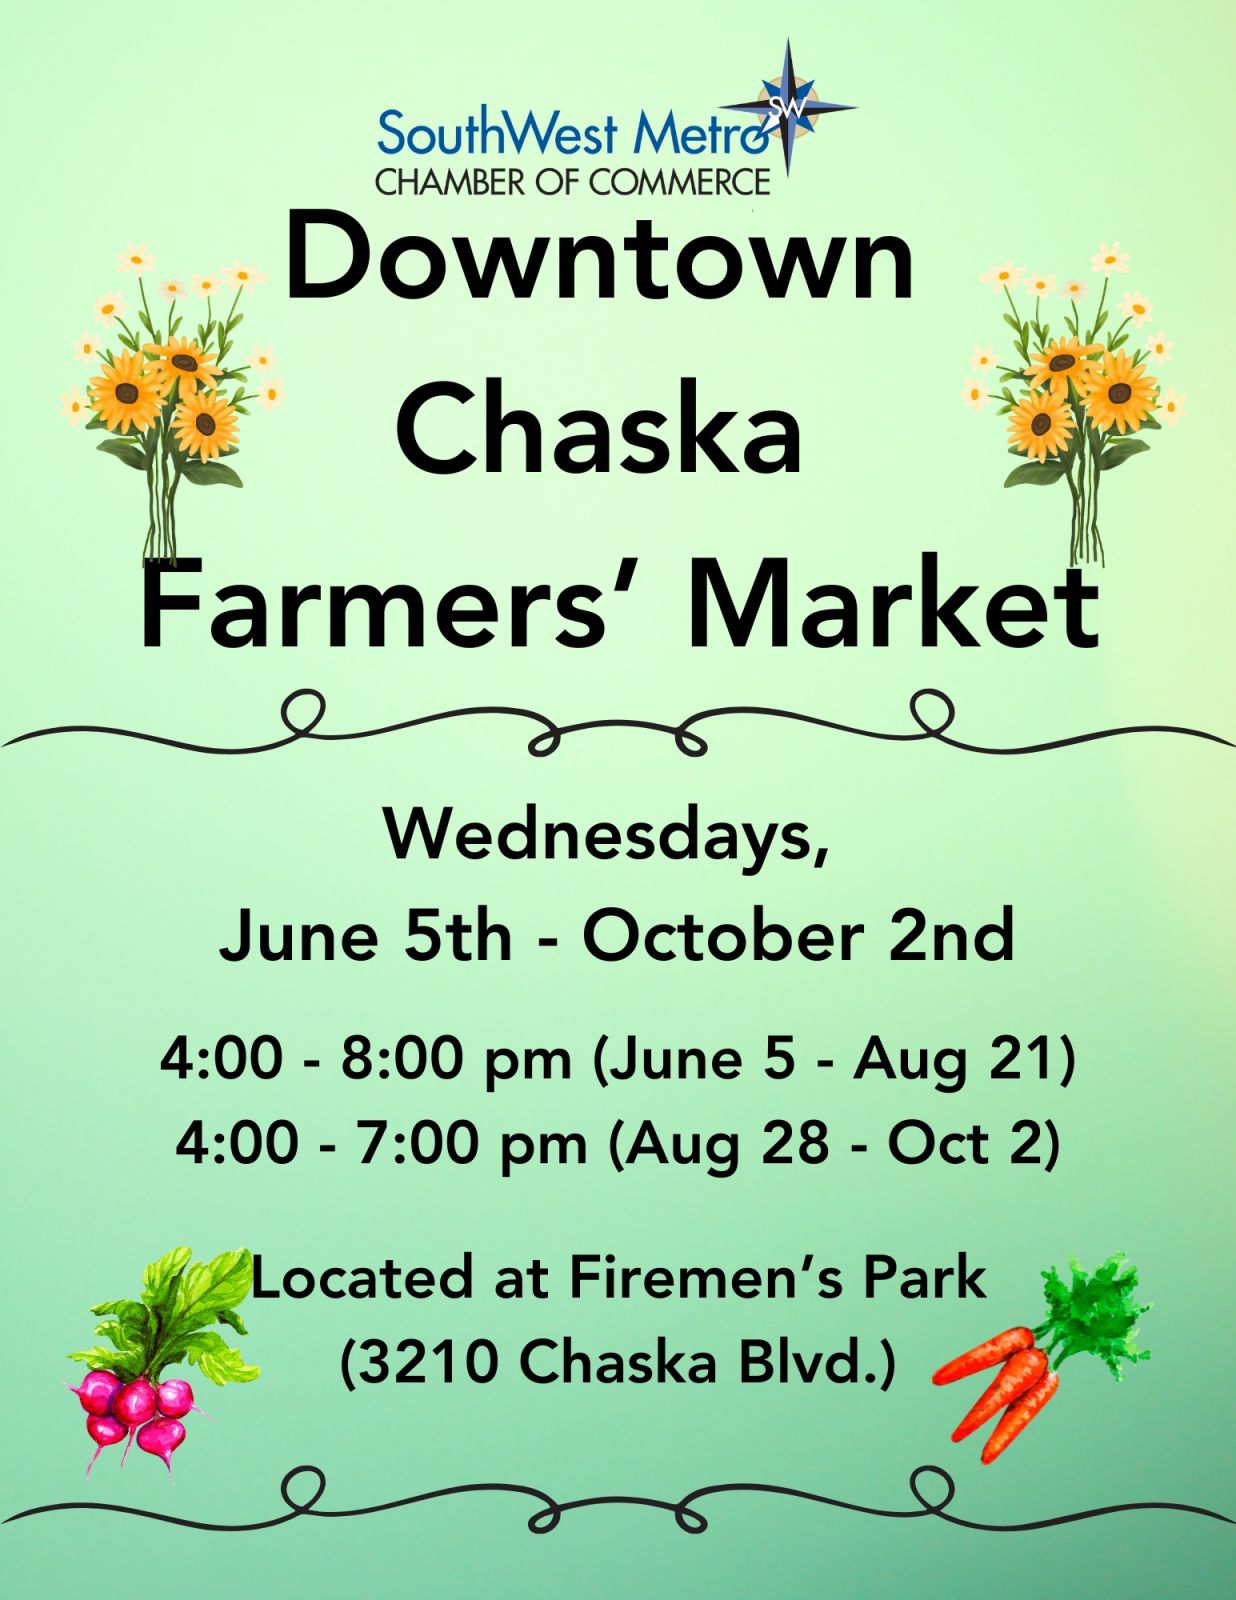 Downtown Chaska Farmers' Market, Wednesdays